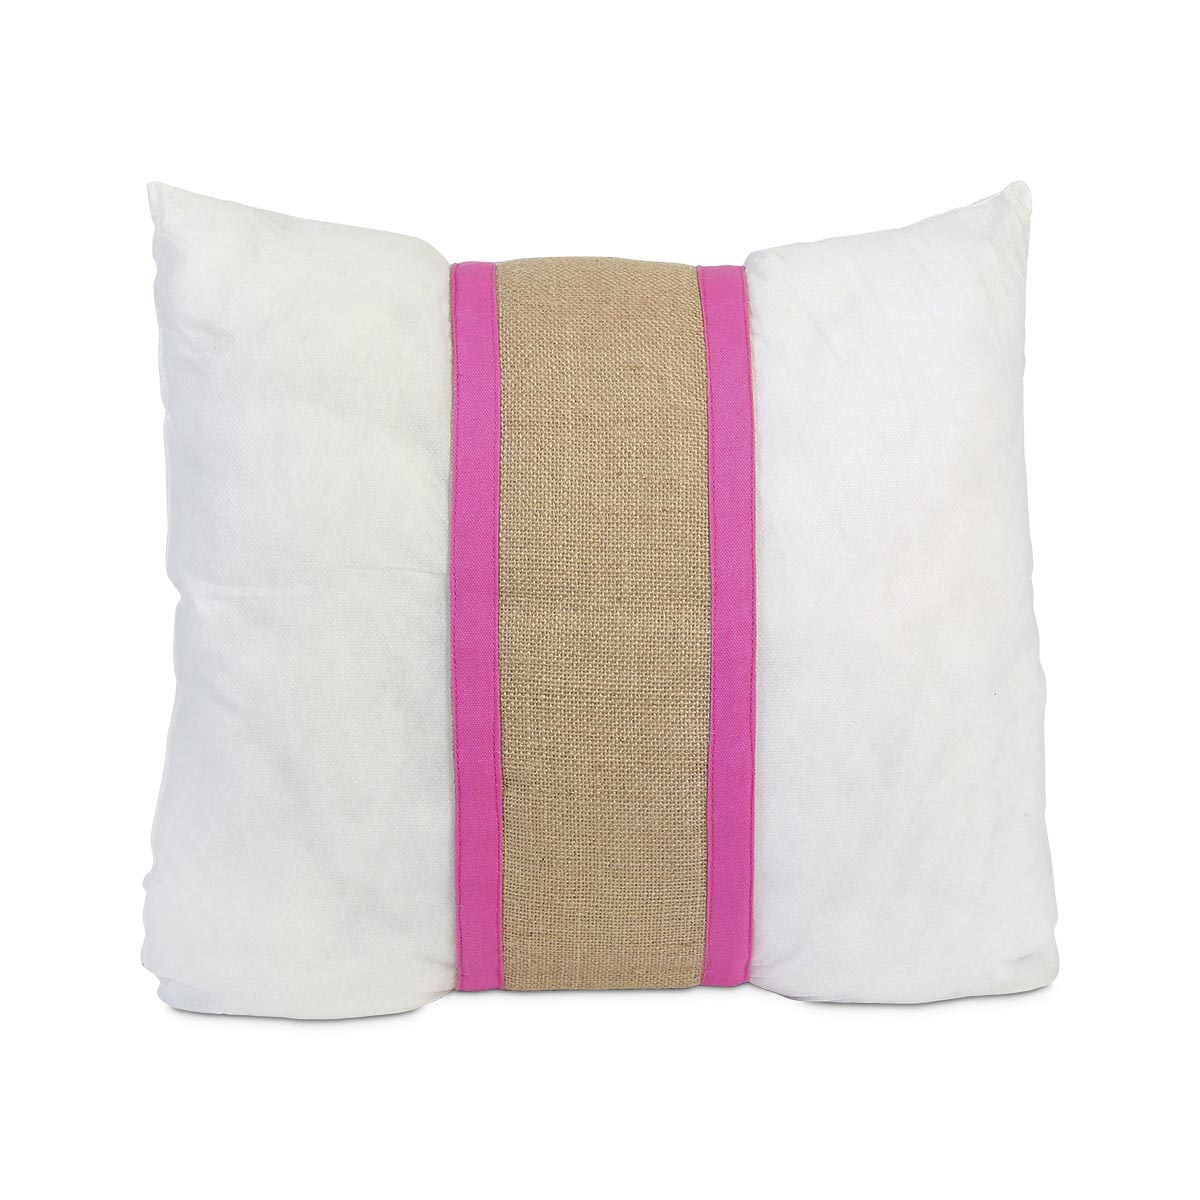 khaki jute pillow band w/ pink, fits standard 16